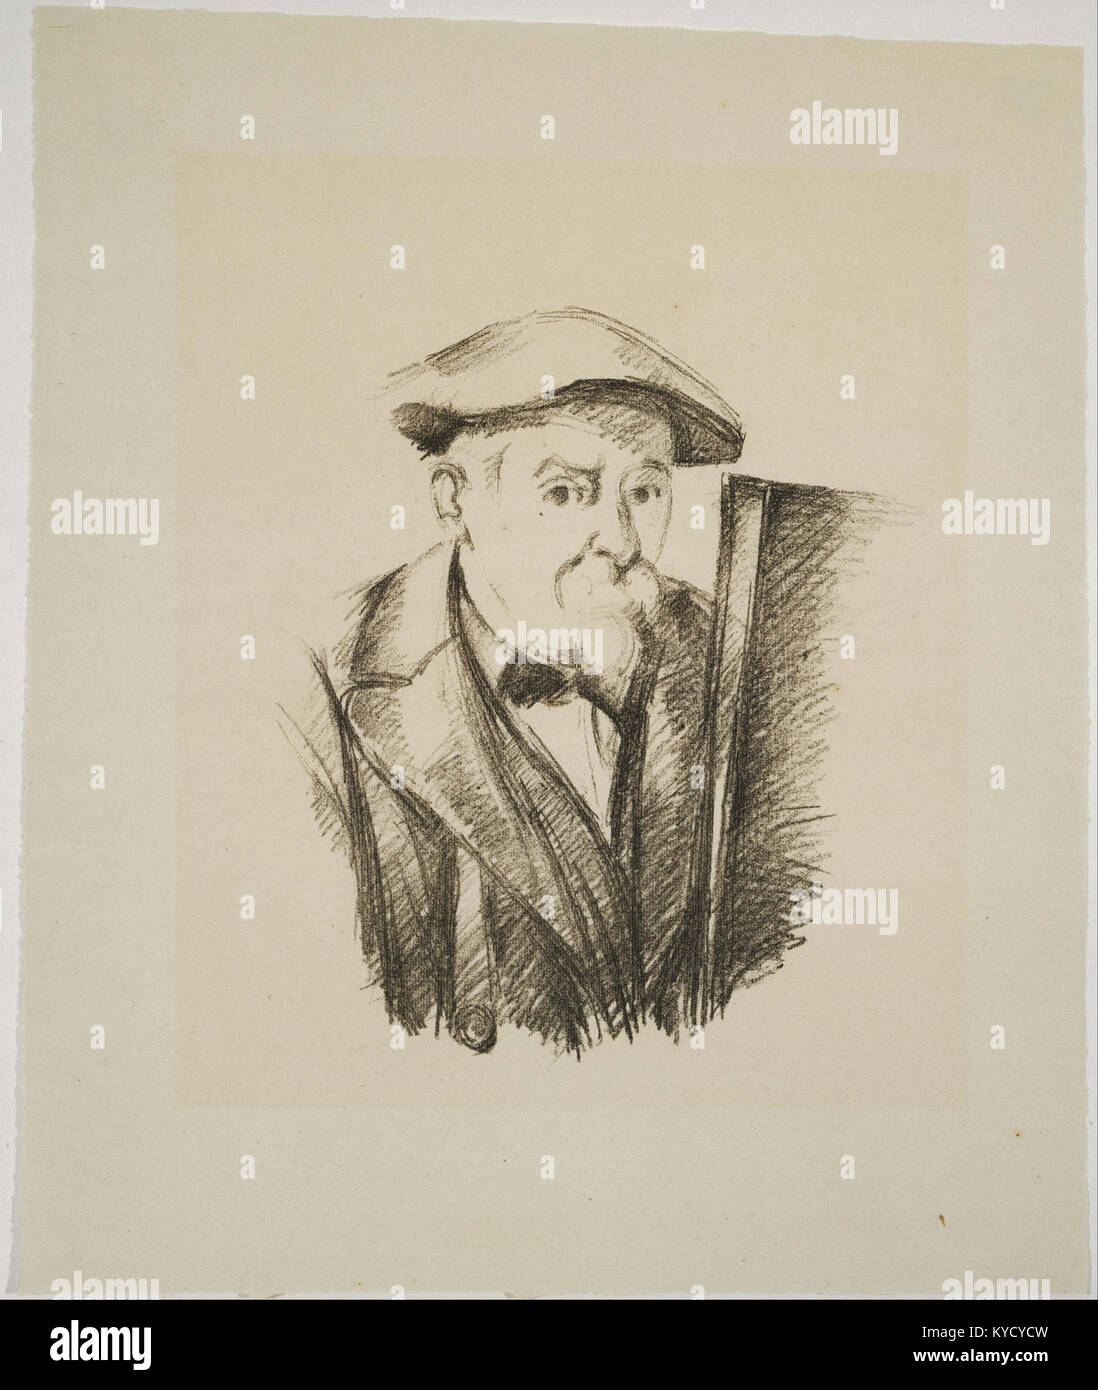 Paul Cézanne - Self-Portrait - Google Art Project (27718094) Stock Photo